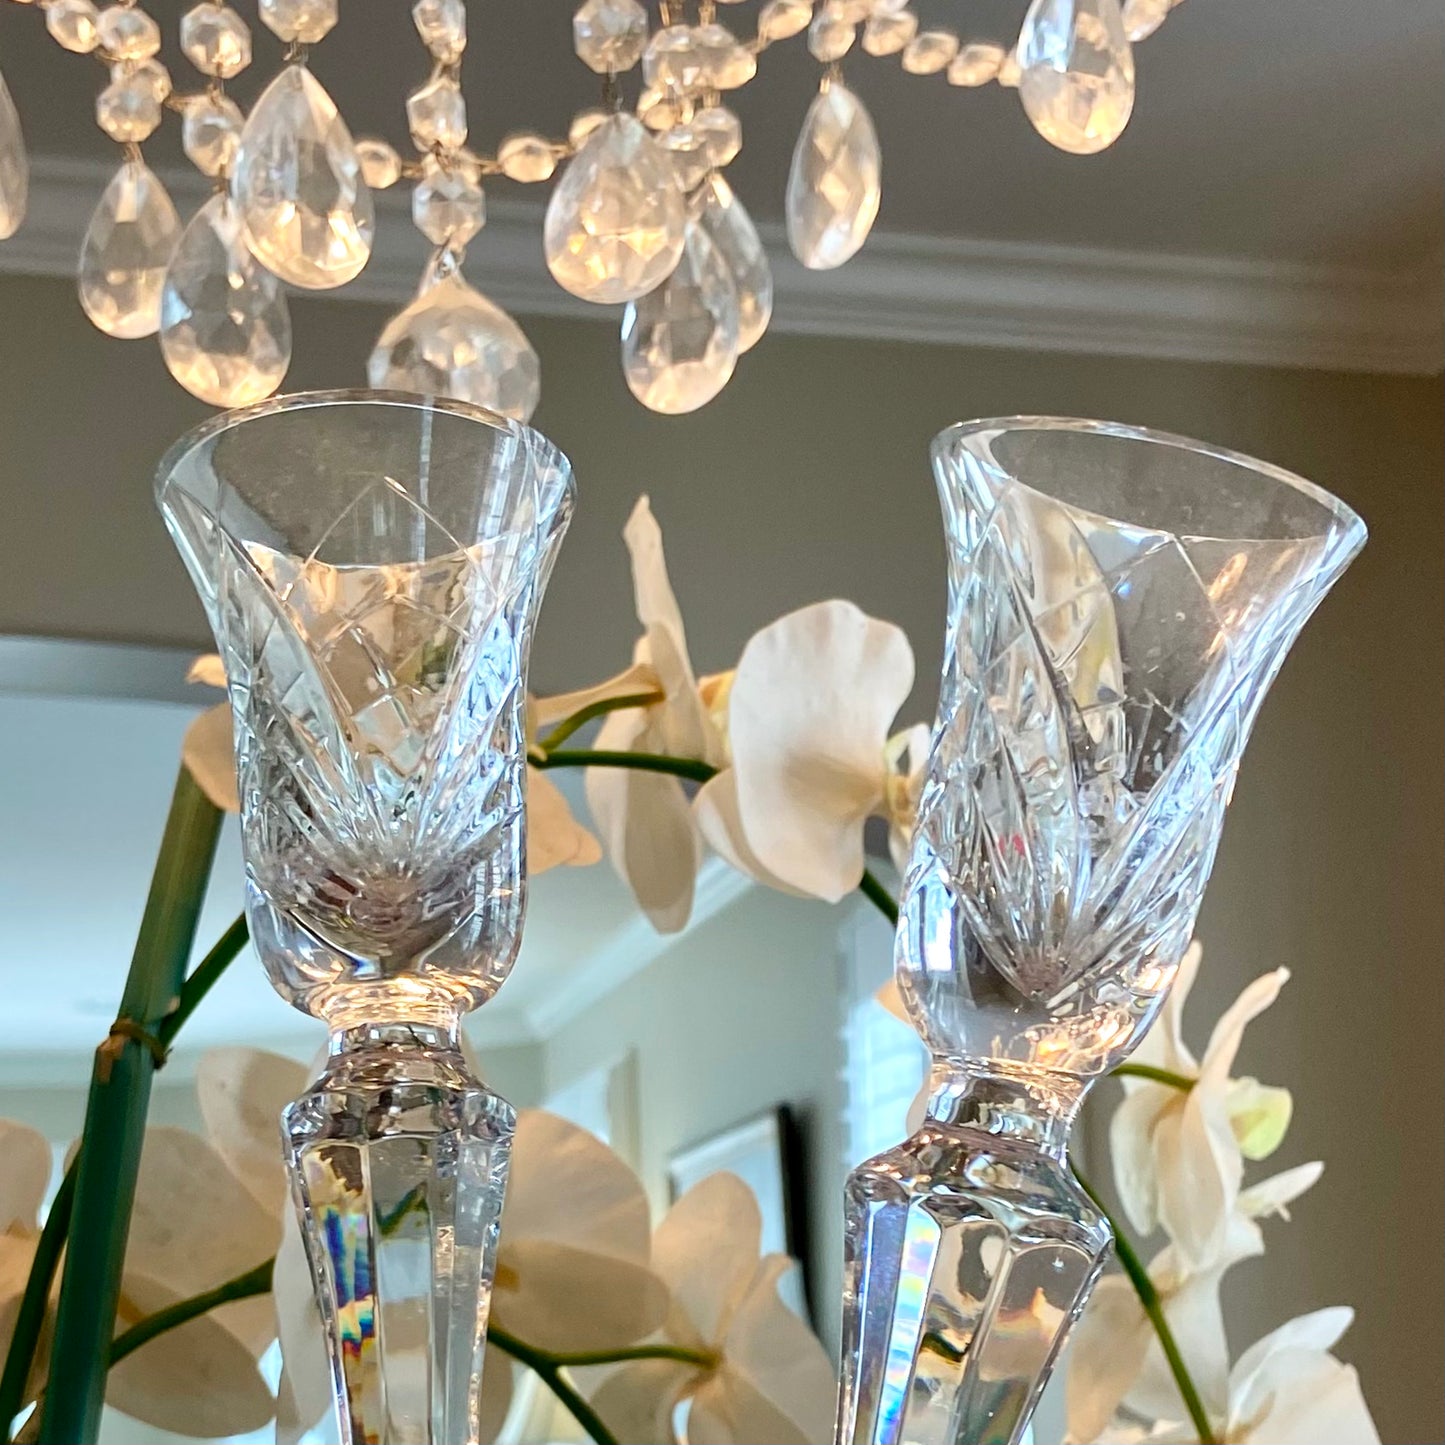 Stunning vintage crystal candlestick holders, 7.5” tall - Pristine!